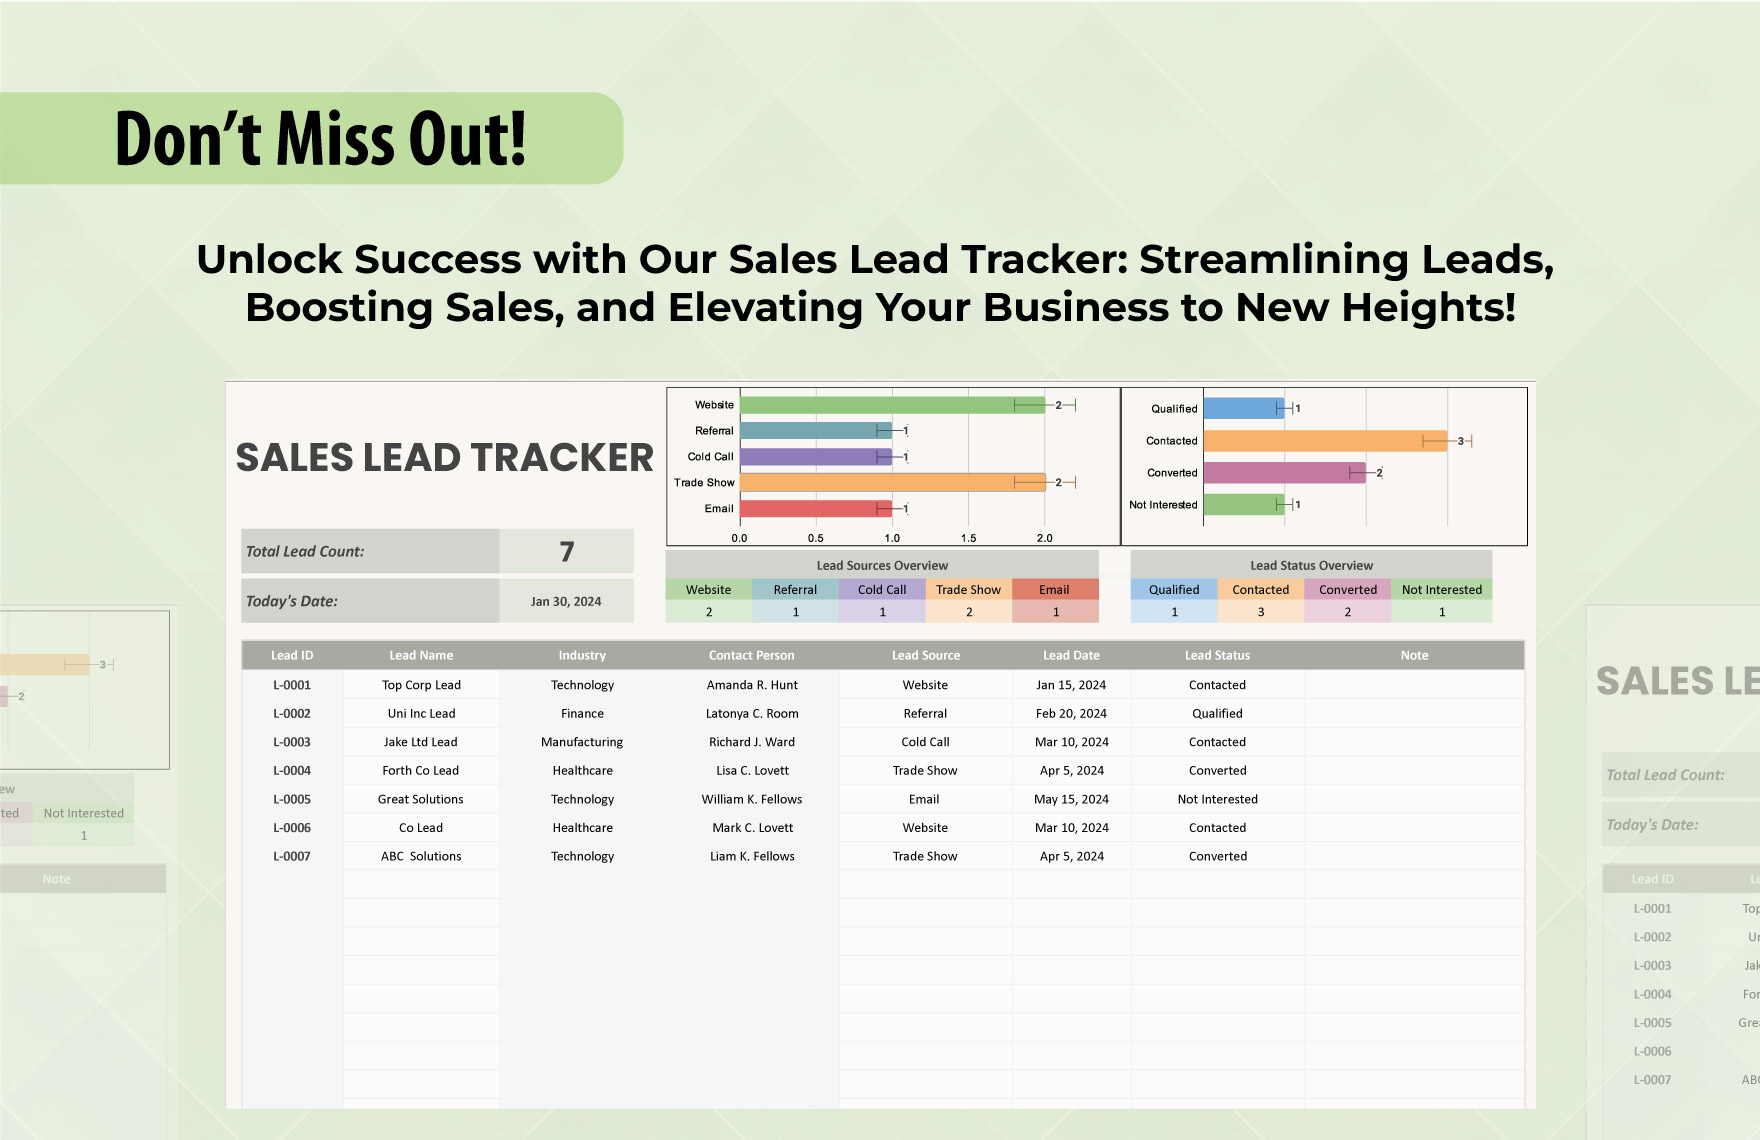 Sales Lead Tracker Template